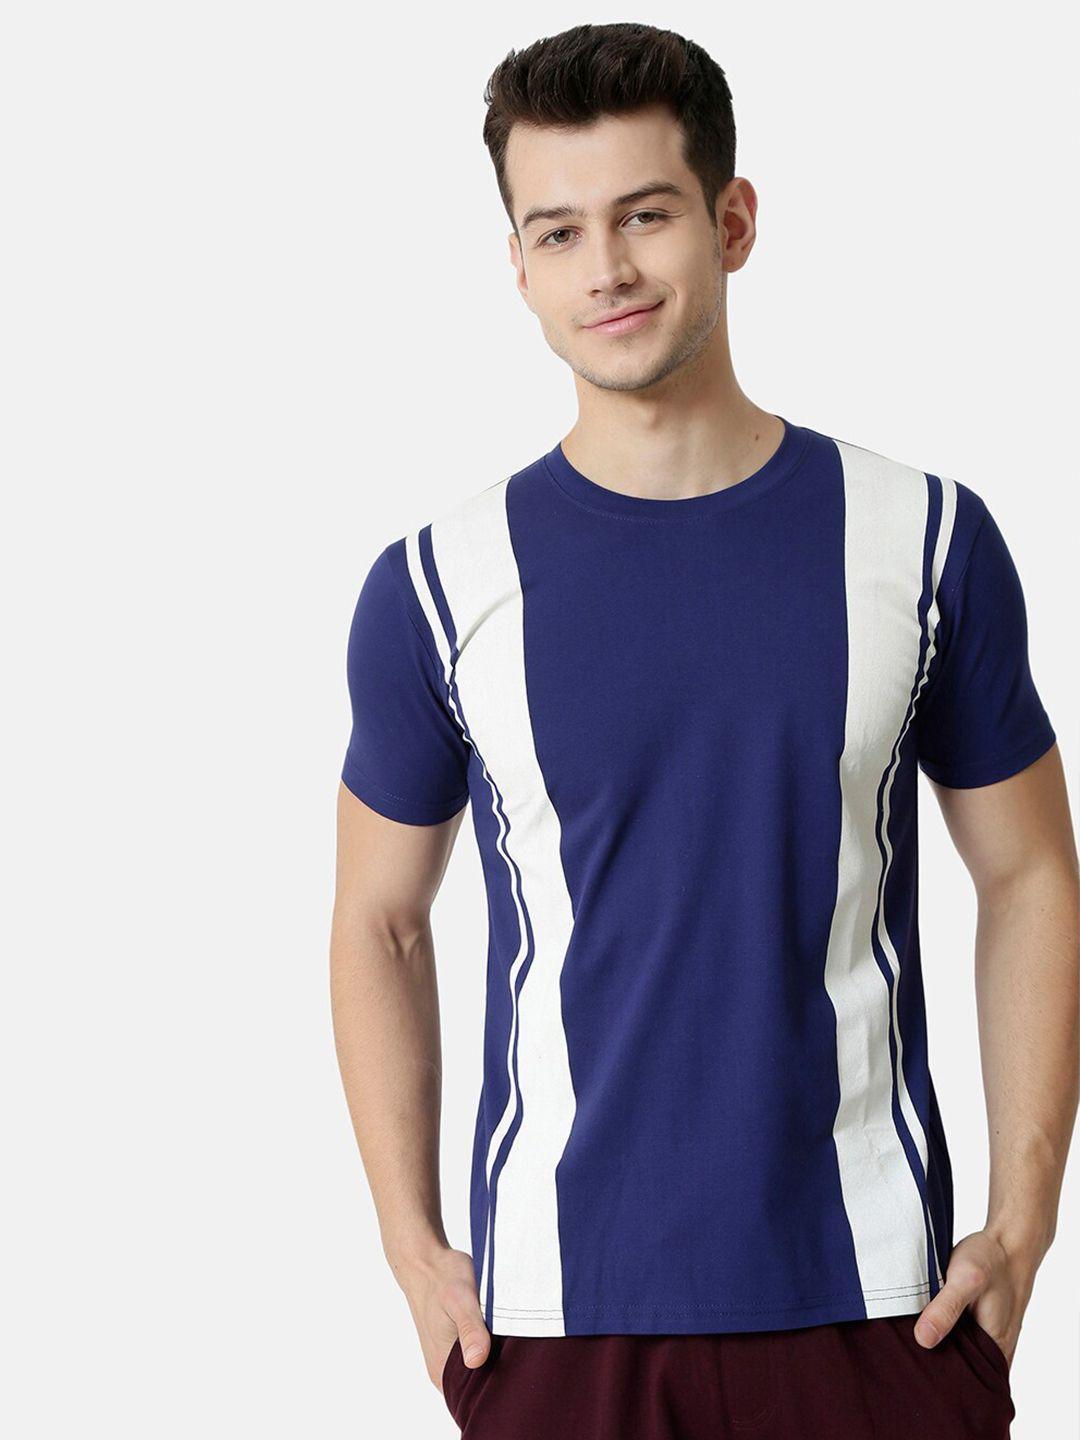 campus sutra men navy blue & indigo colourblocked v-neck raw edge t-shirt